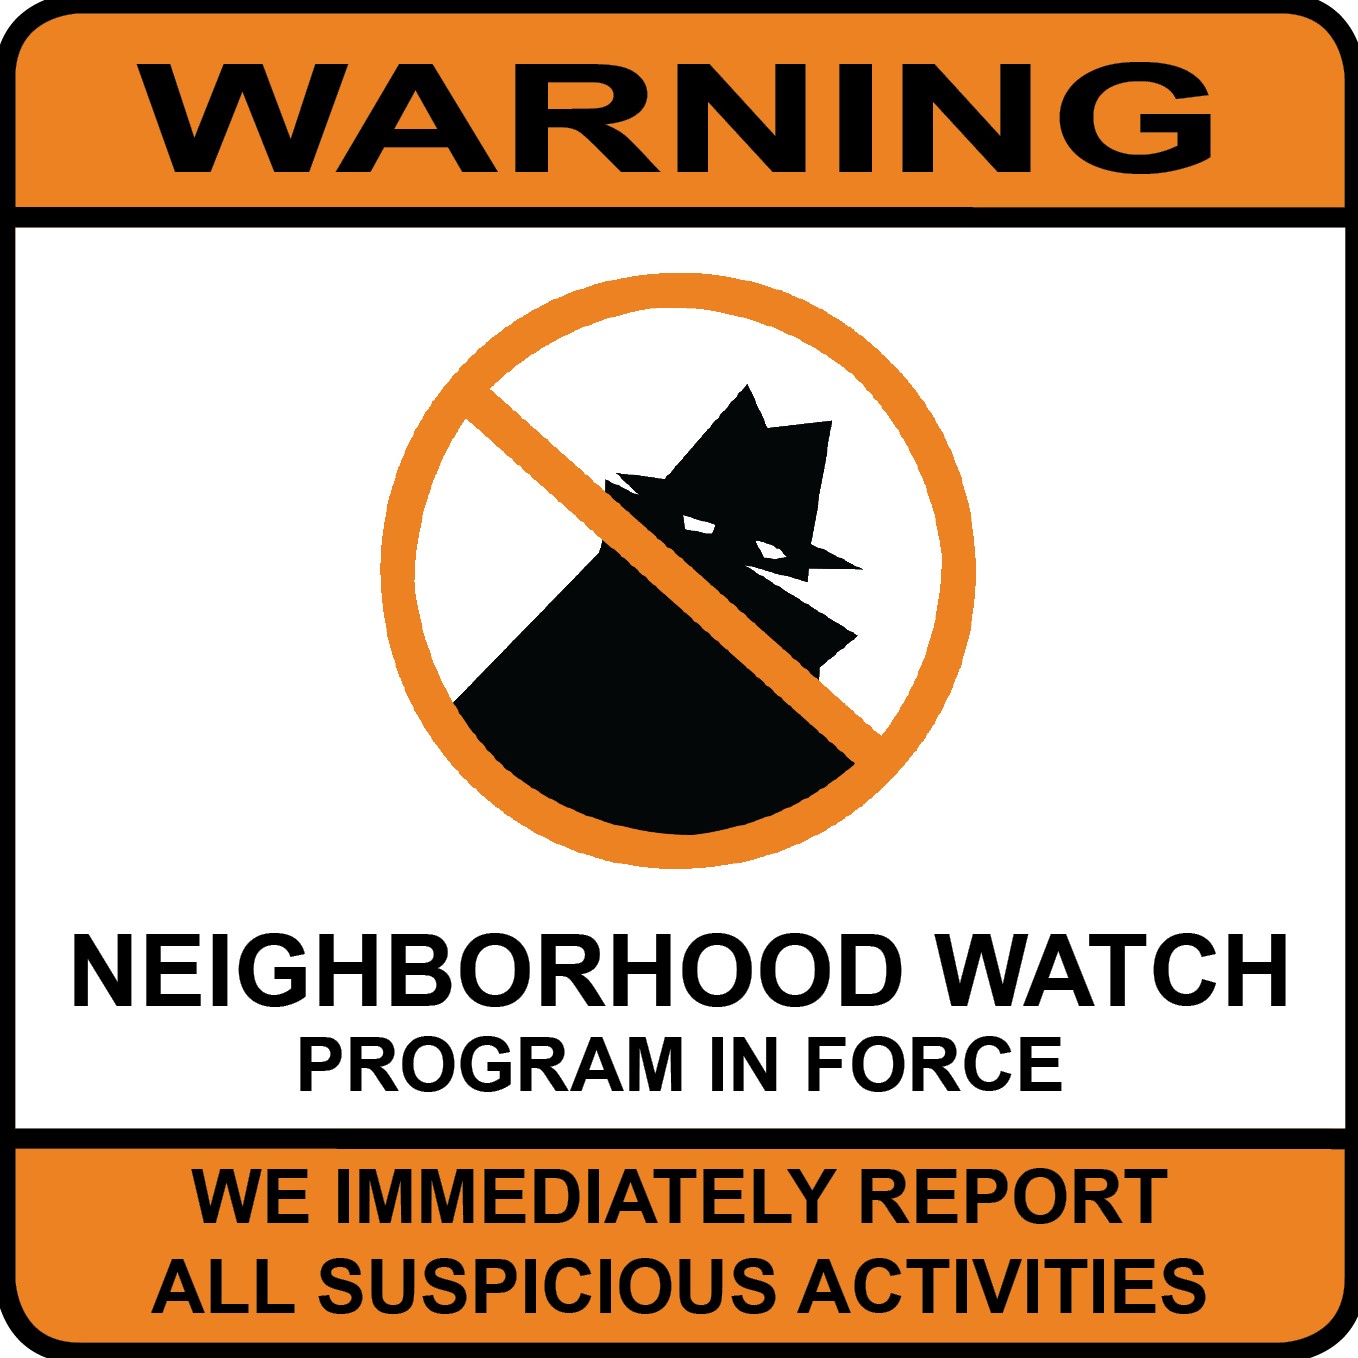 Neighborhood Watch Meeting: Tuesday, May 21